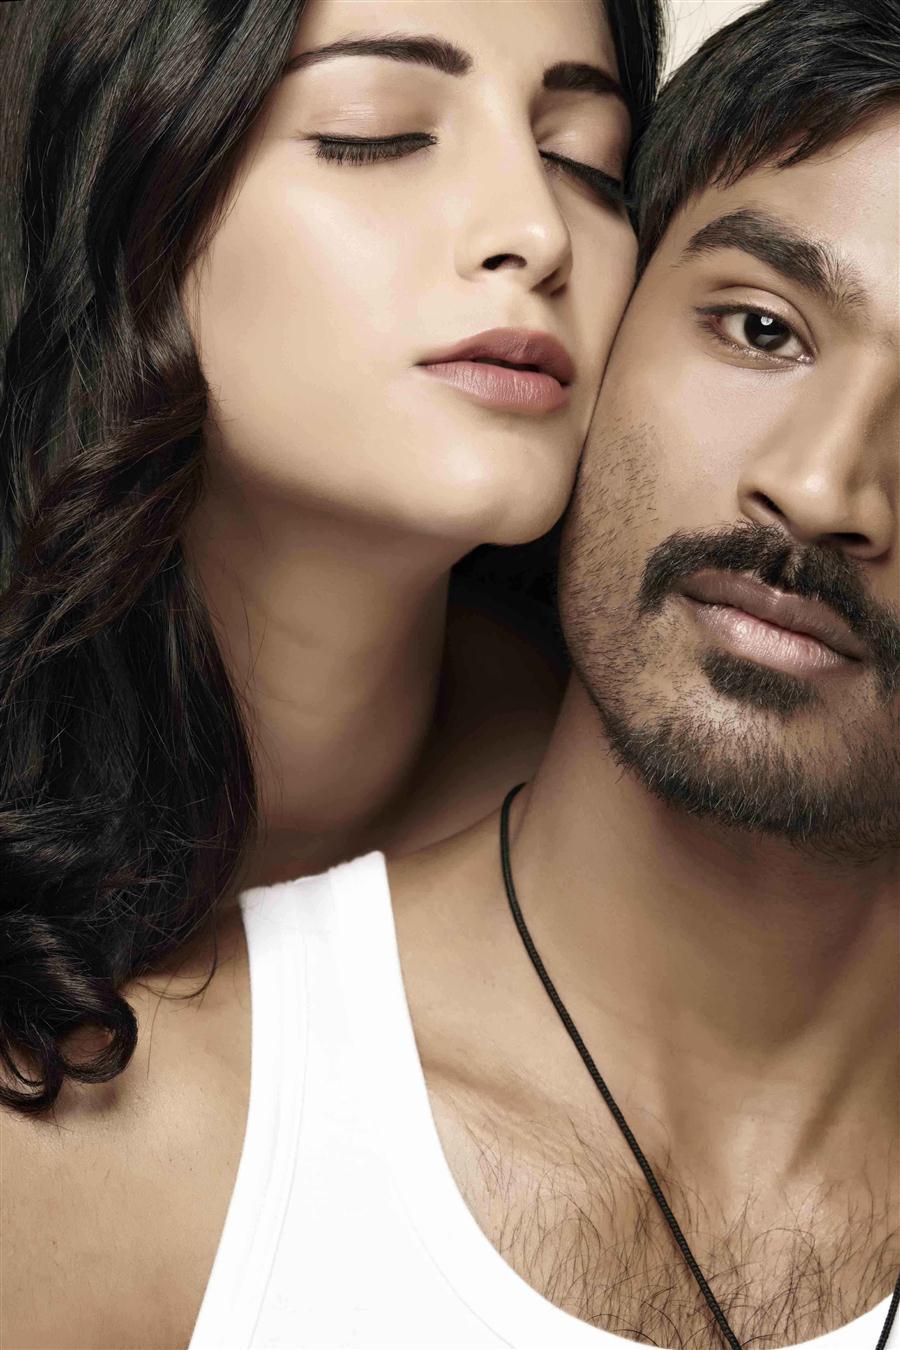 Latest Movie Posters Trailers Events Reviews: Dhanush 3 Movie Posters. Dhanush Shruti Hasan in 3 Tamil Movie Stills